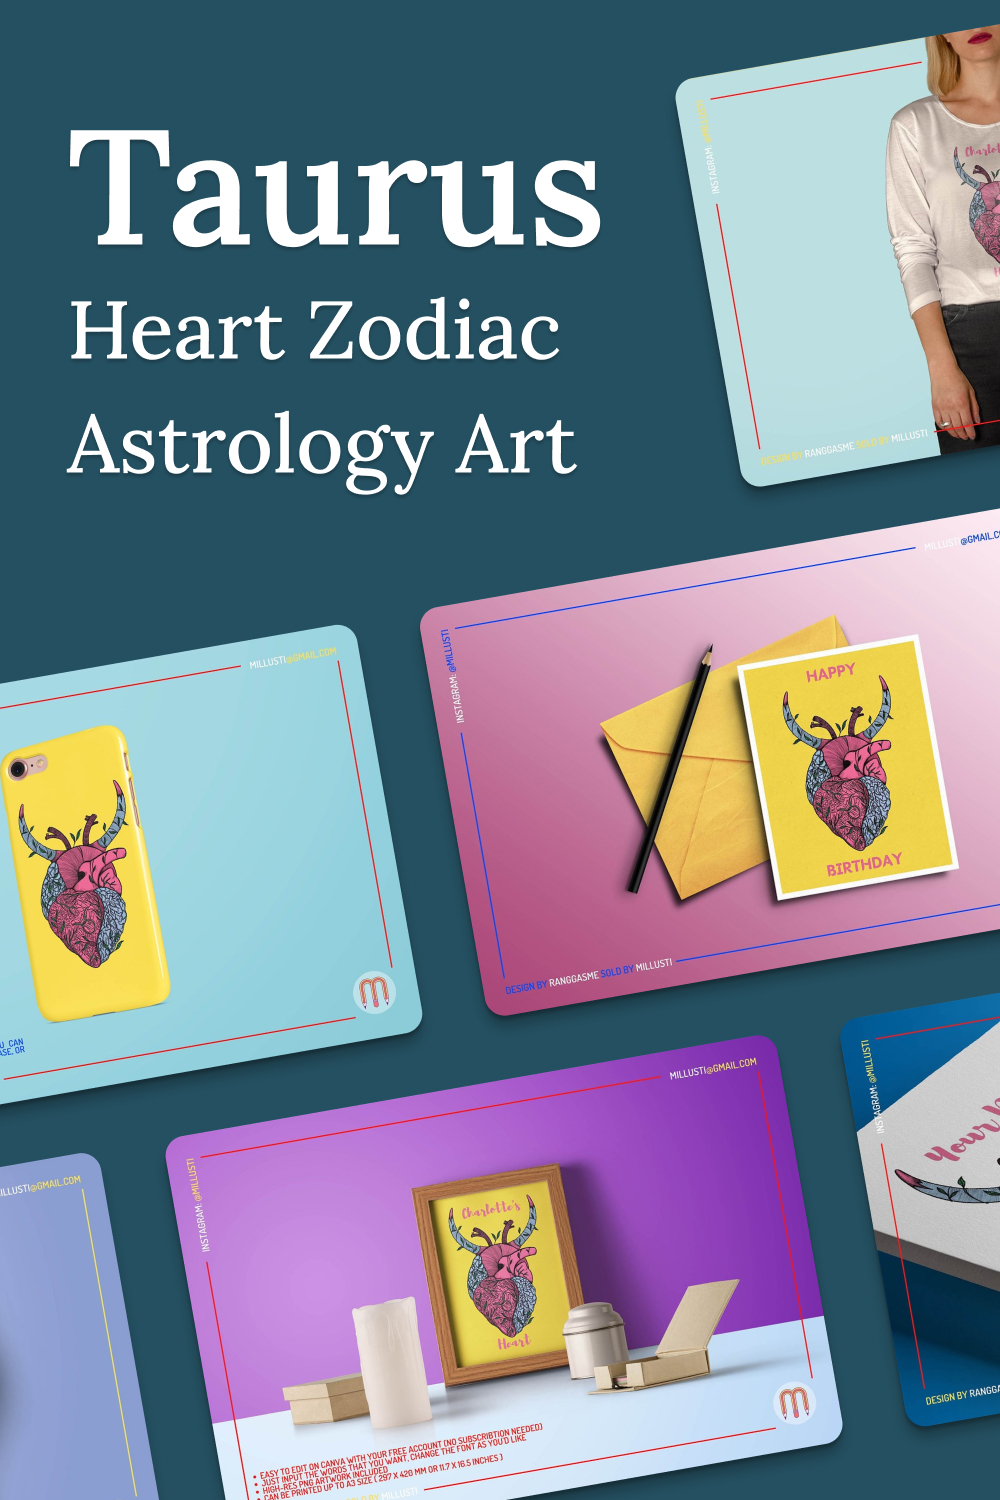 taurus heart zodiac astrology art 02 798